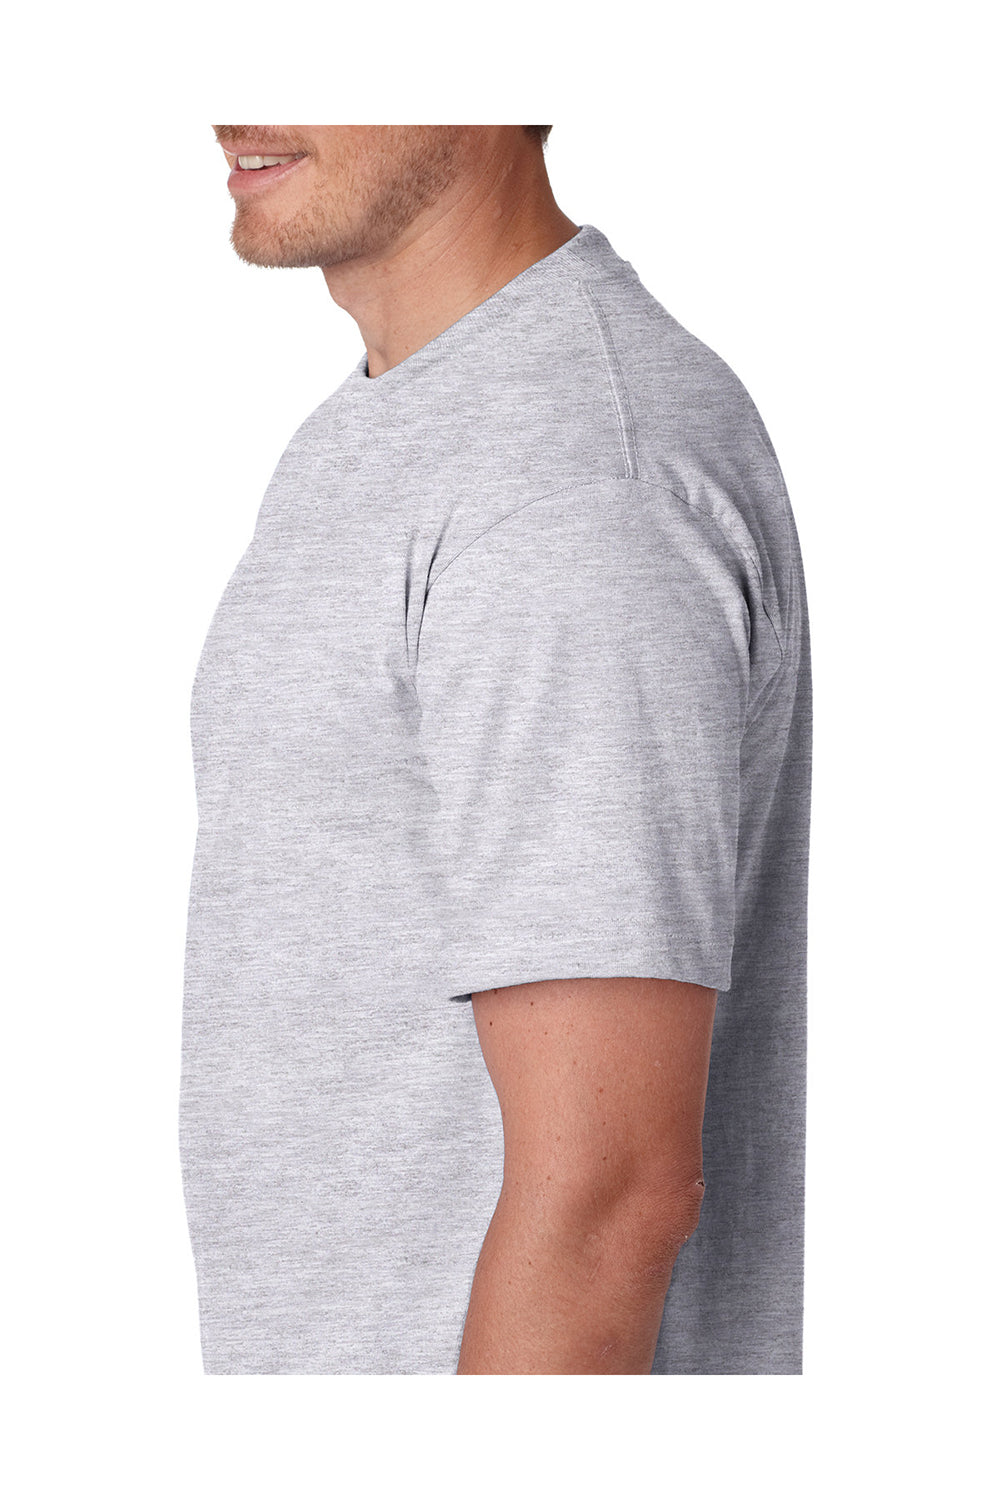 Bayside BA5100 Mens USA Made Short Sleeve Crewneck T-Shirt Ash Grey Model Side